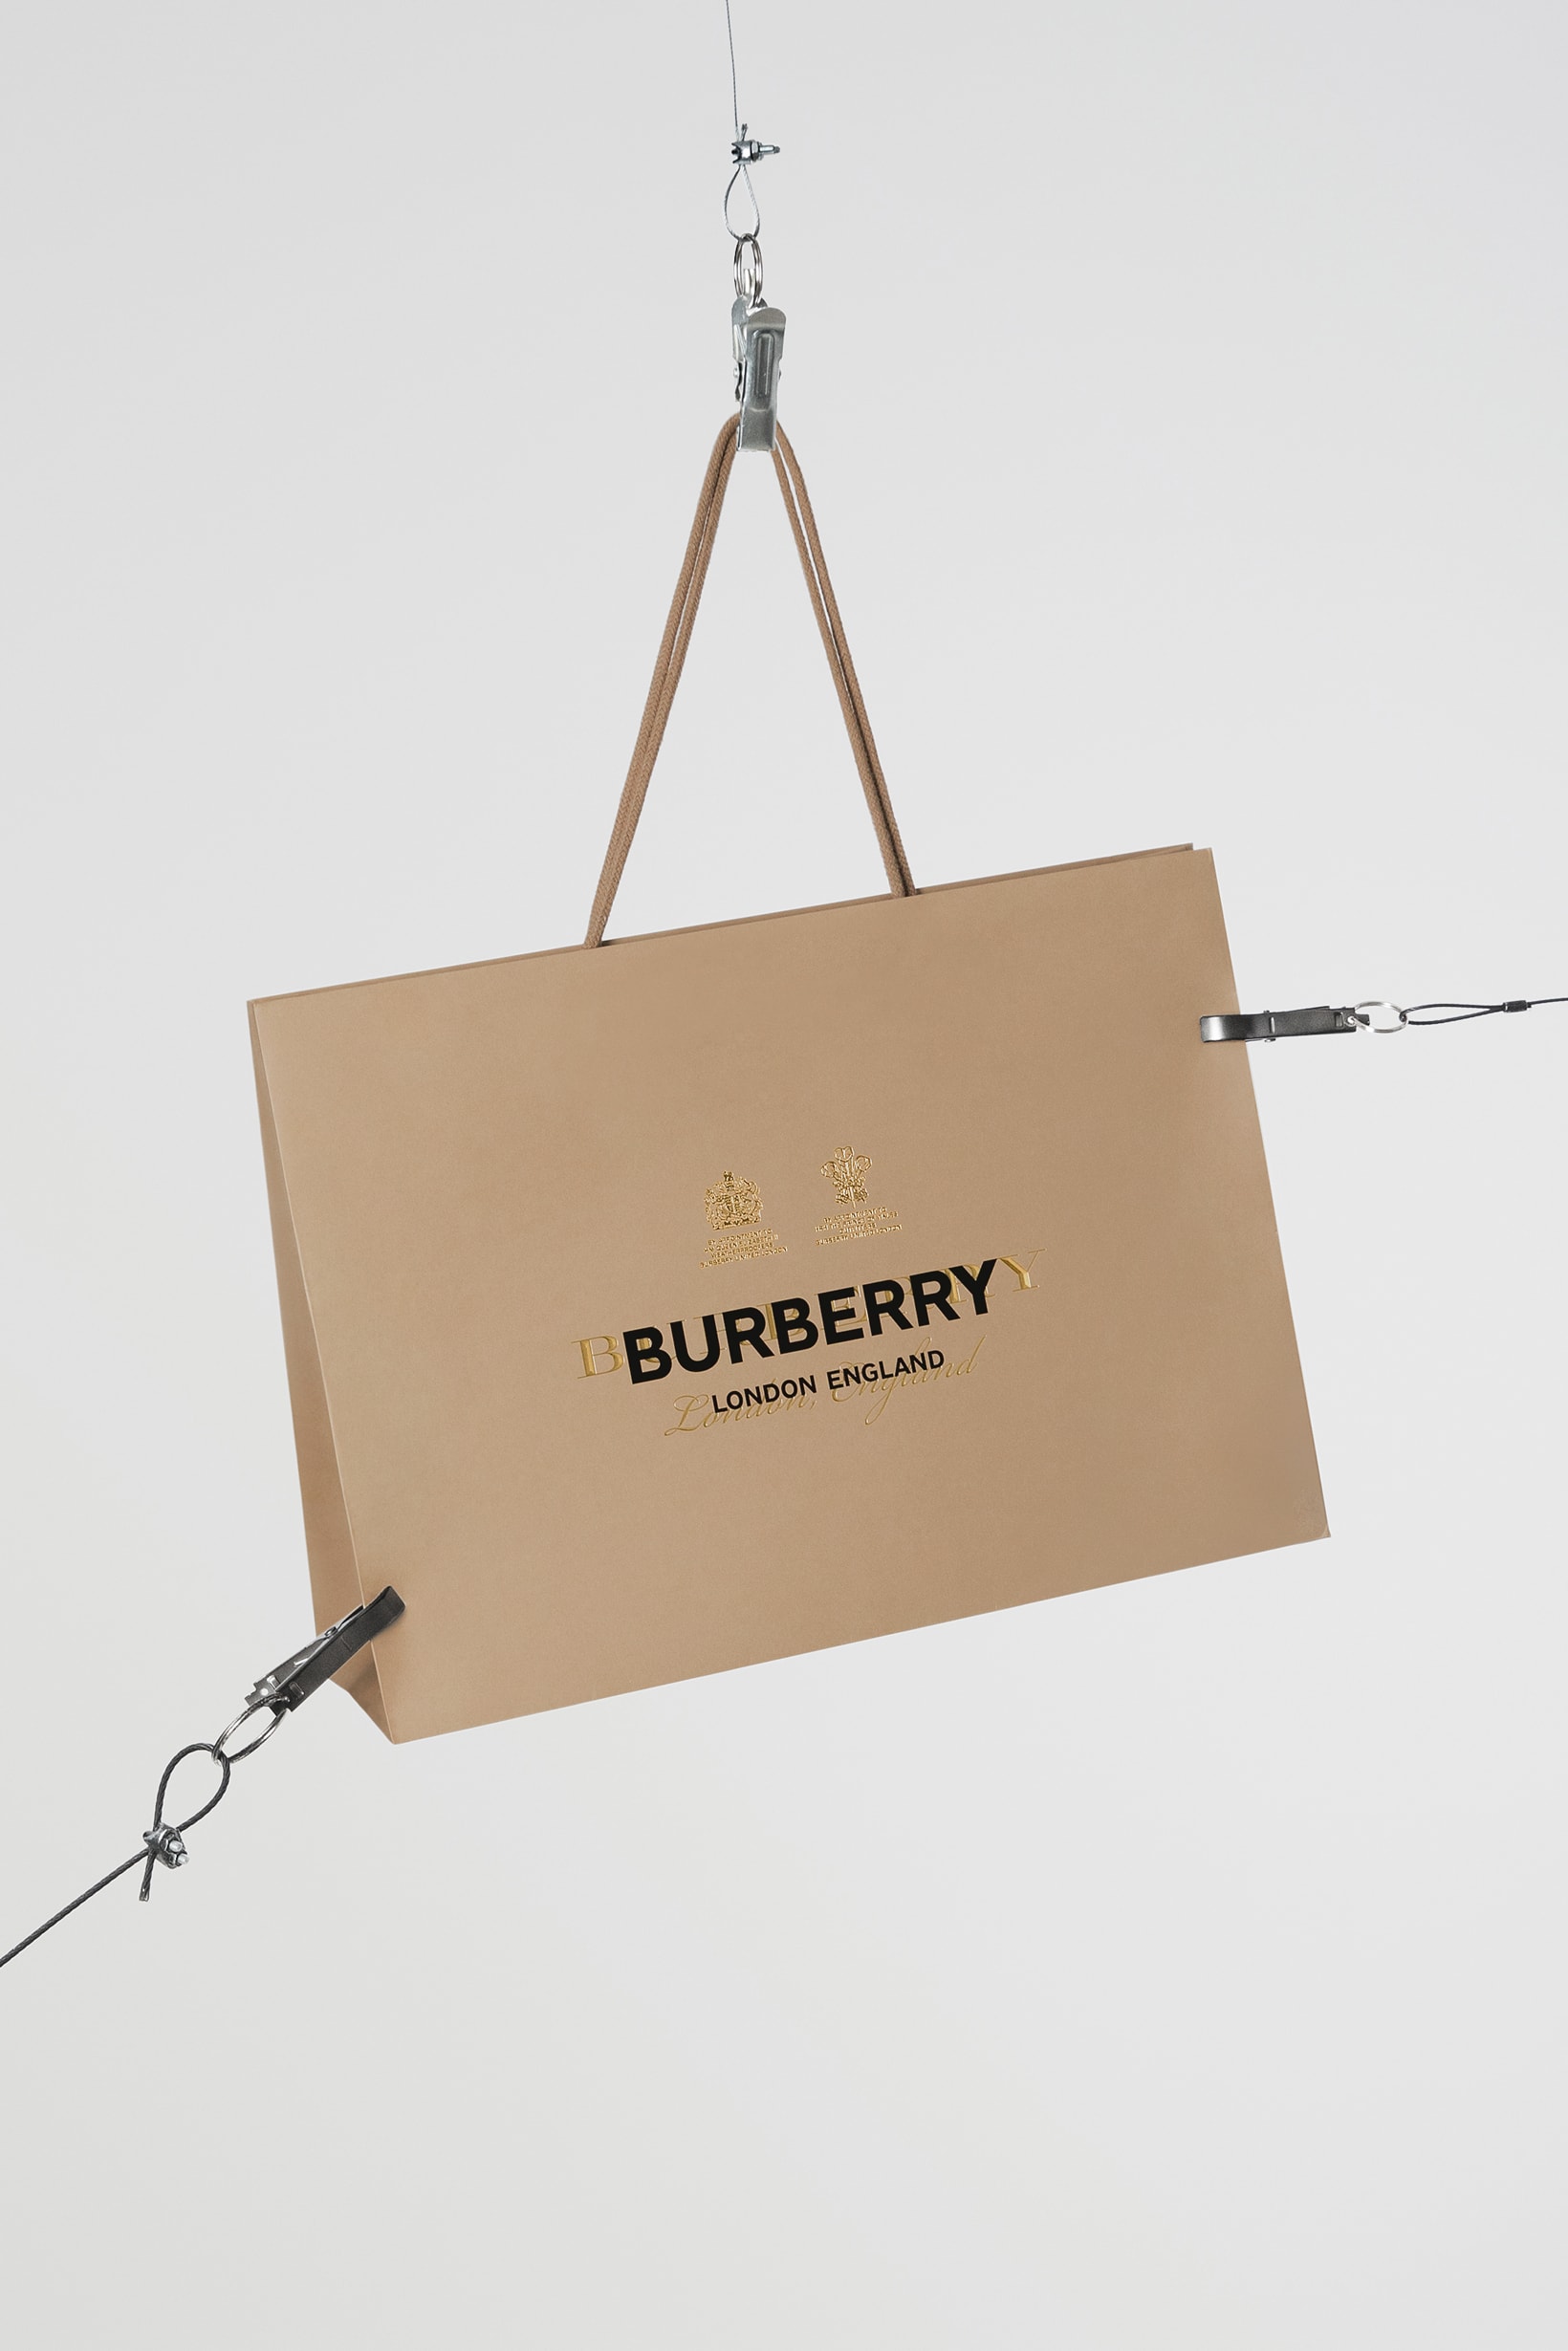 Burberry Paper Bag London